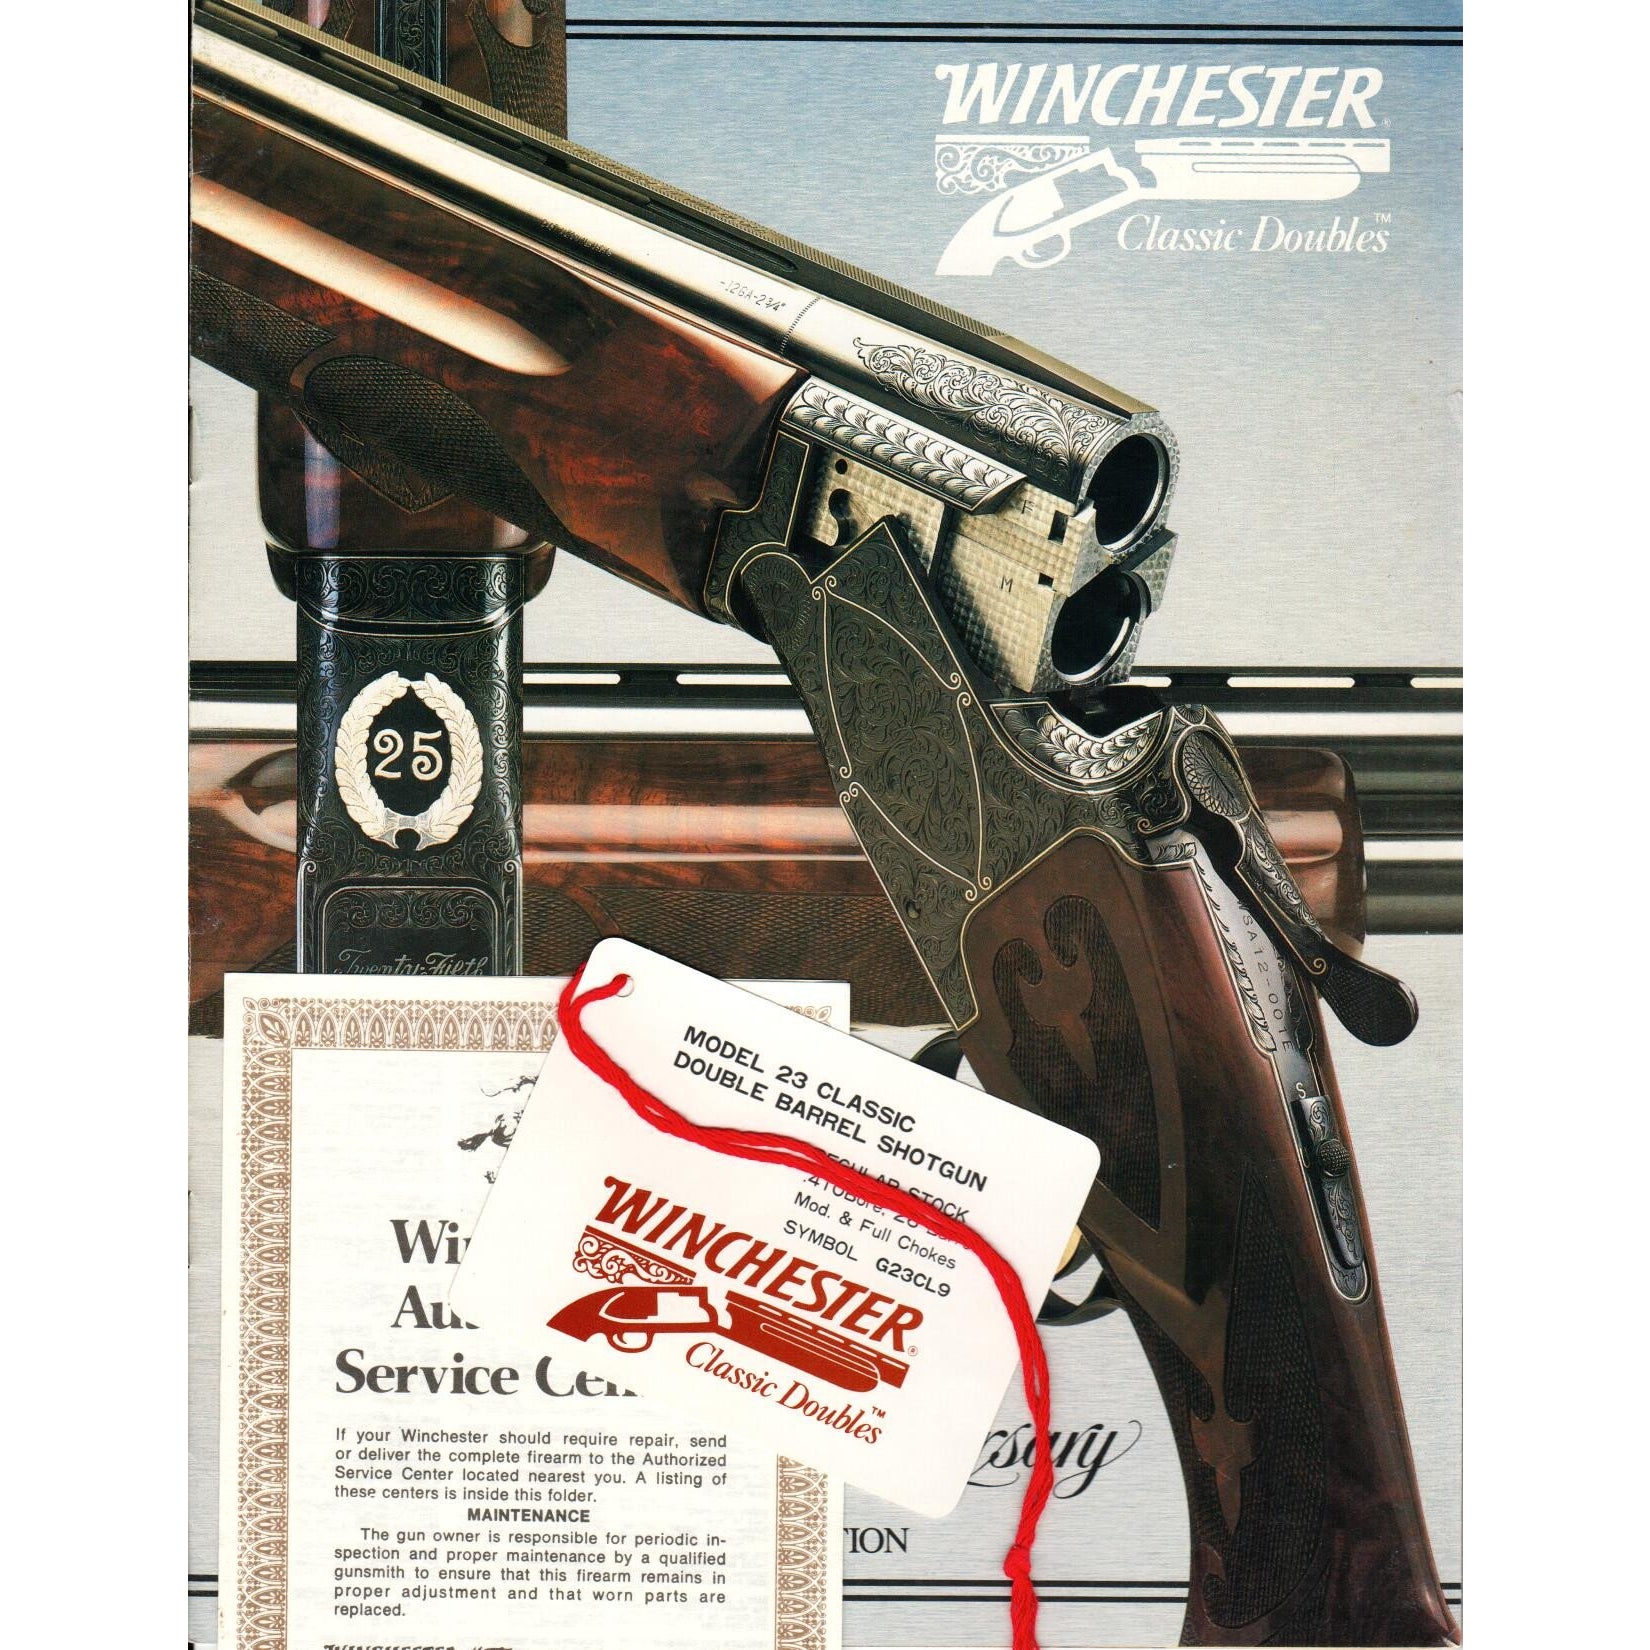 Winchester Classic Doubles Silver Anniversary Edition